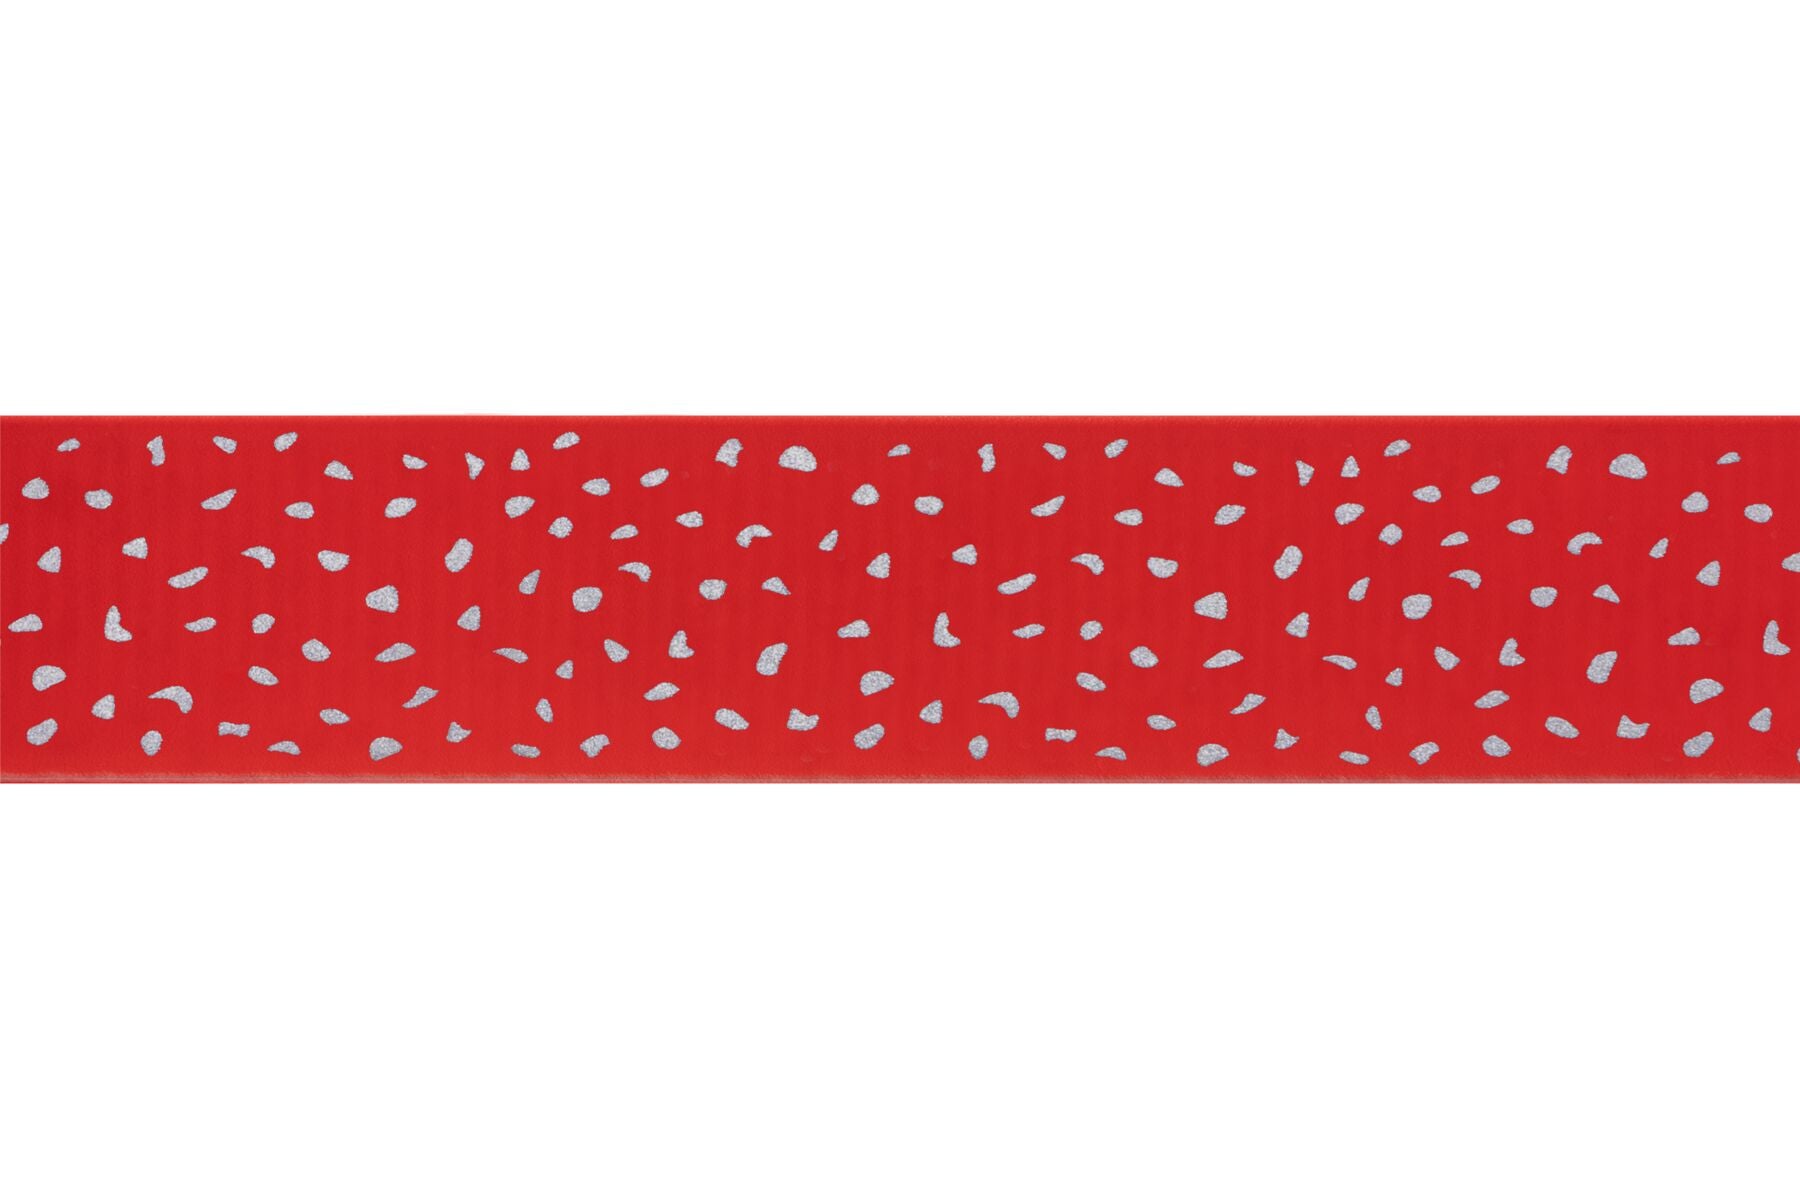 Collar Confluence Impermeable- Rojo (Red Sumac) - Ruffwear